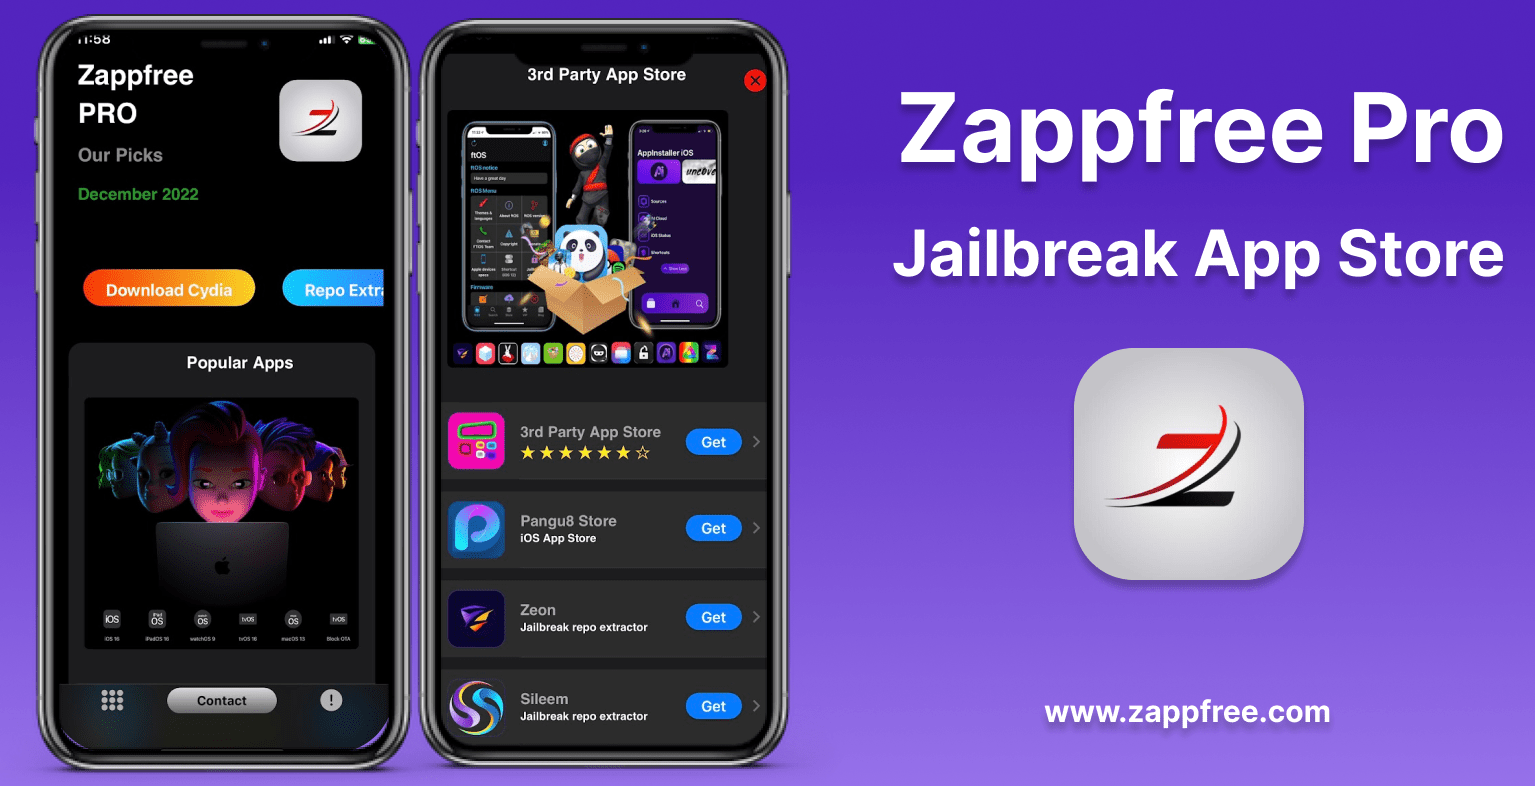 Zappfree Pro jailbreak App Store